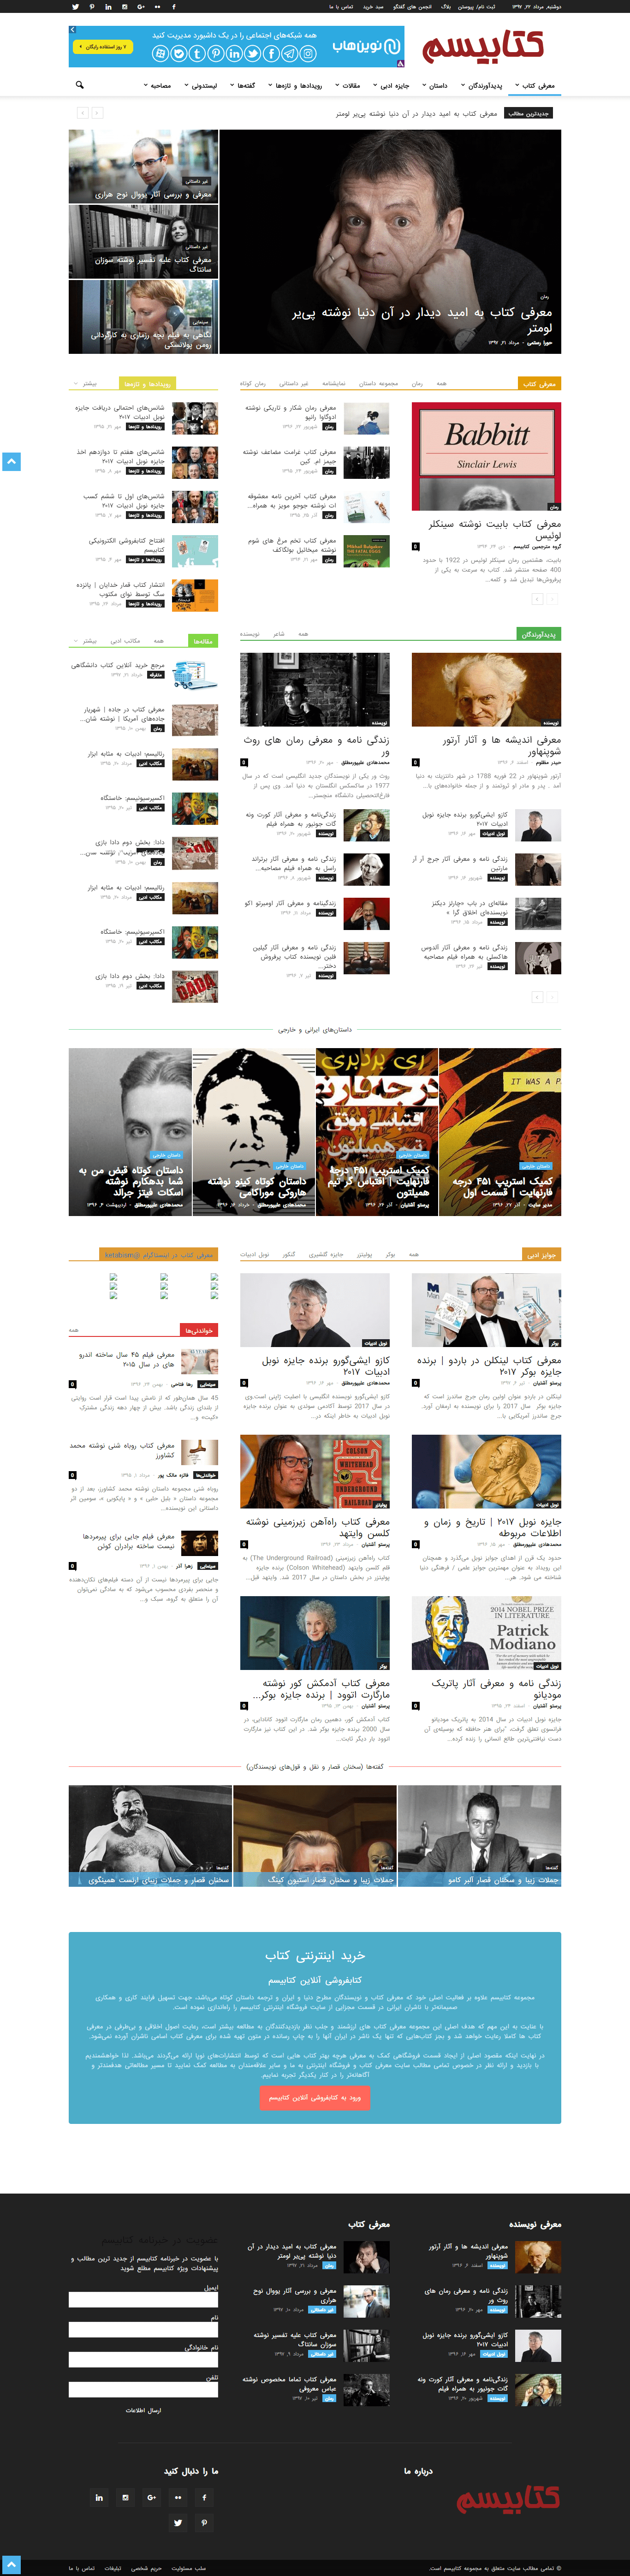 طراحی سایت خبری کتابیسم